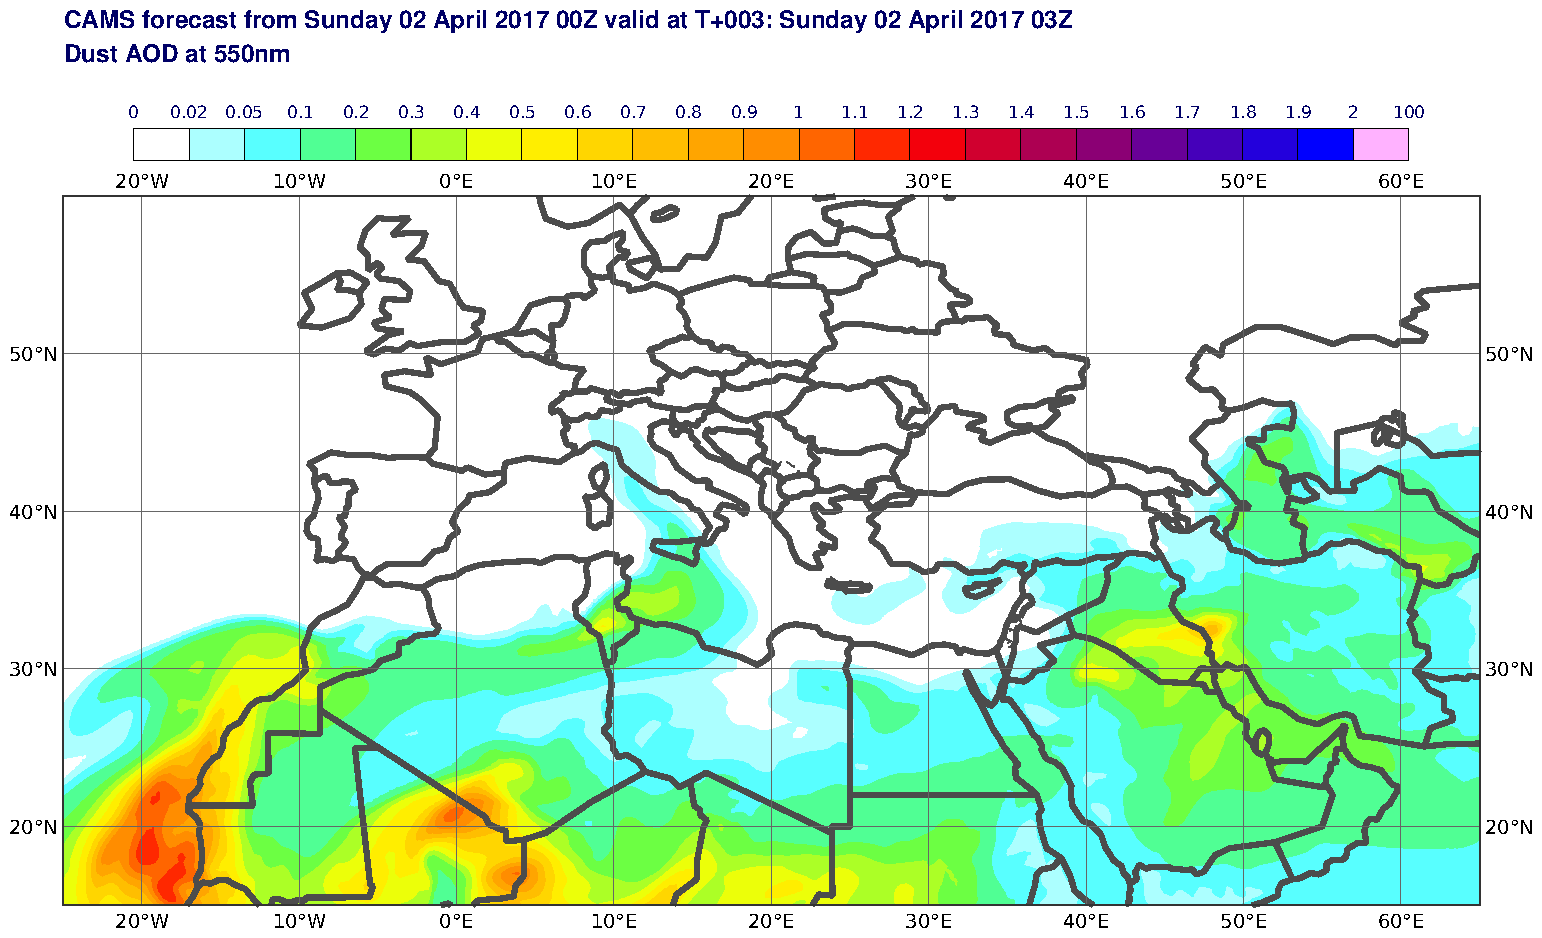 Dust AOD at 550nm valid at T3 - 2017-04-02 03:00